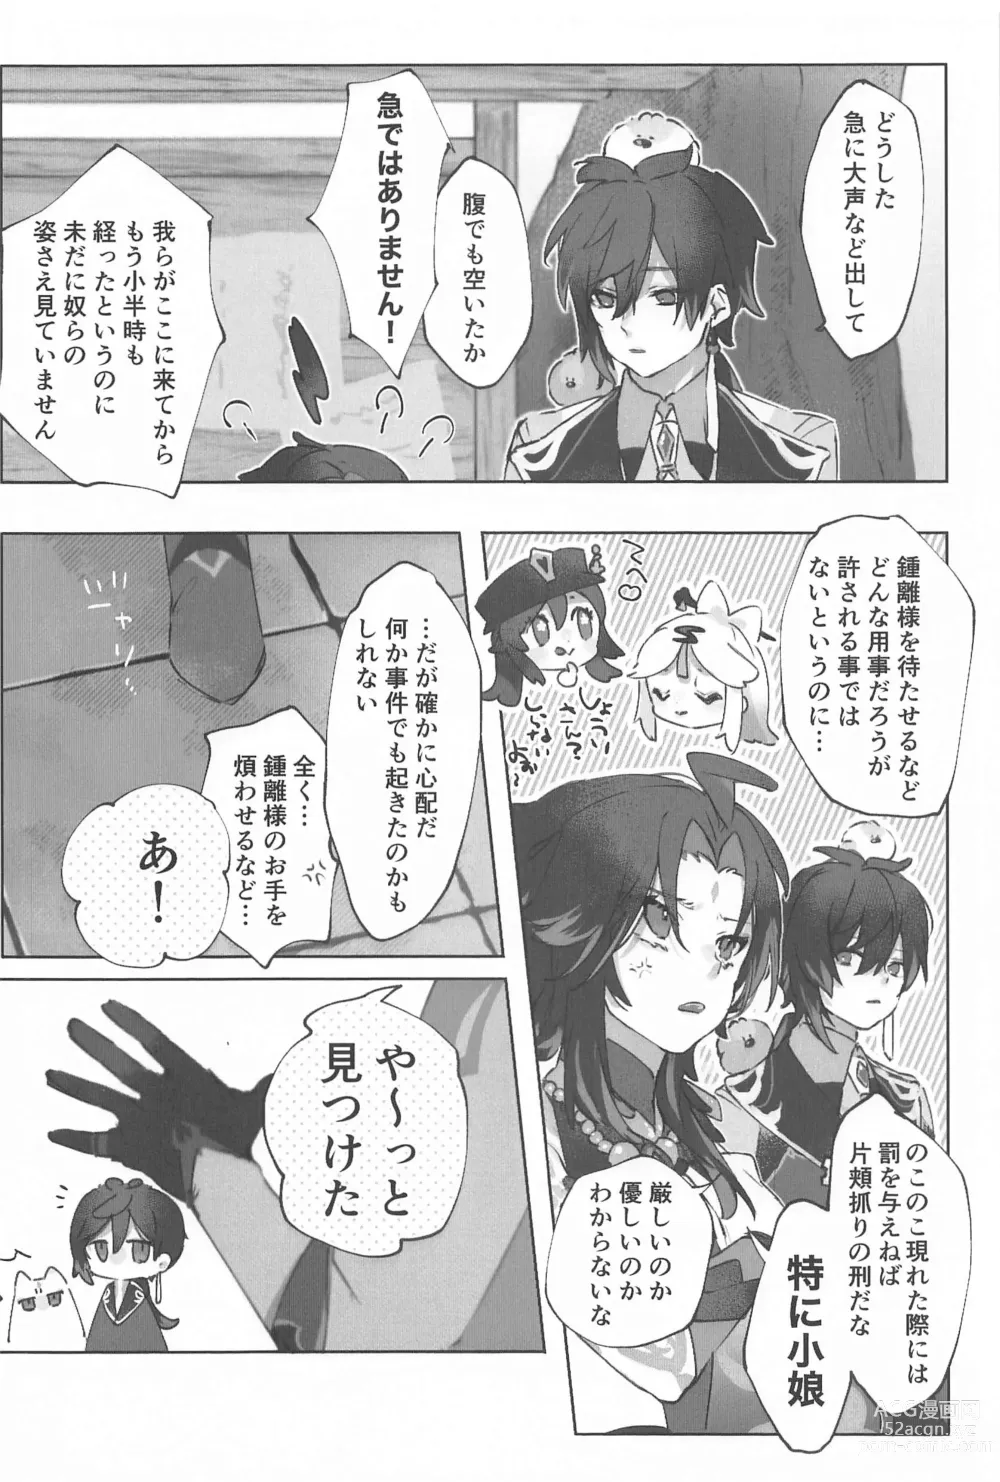 Page 6 of doujinshi Okawari.